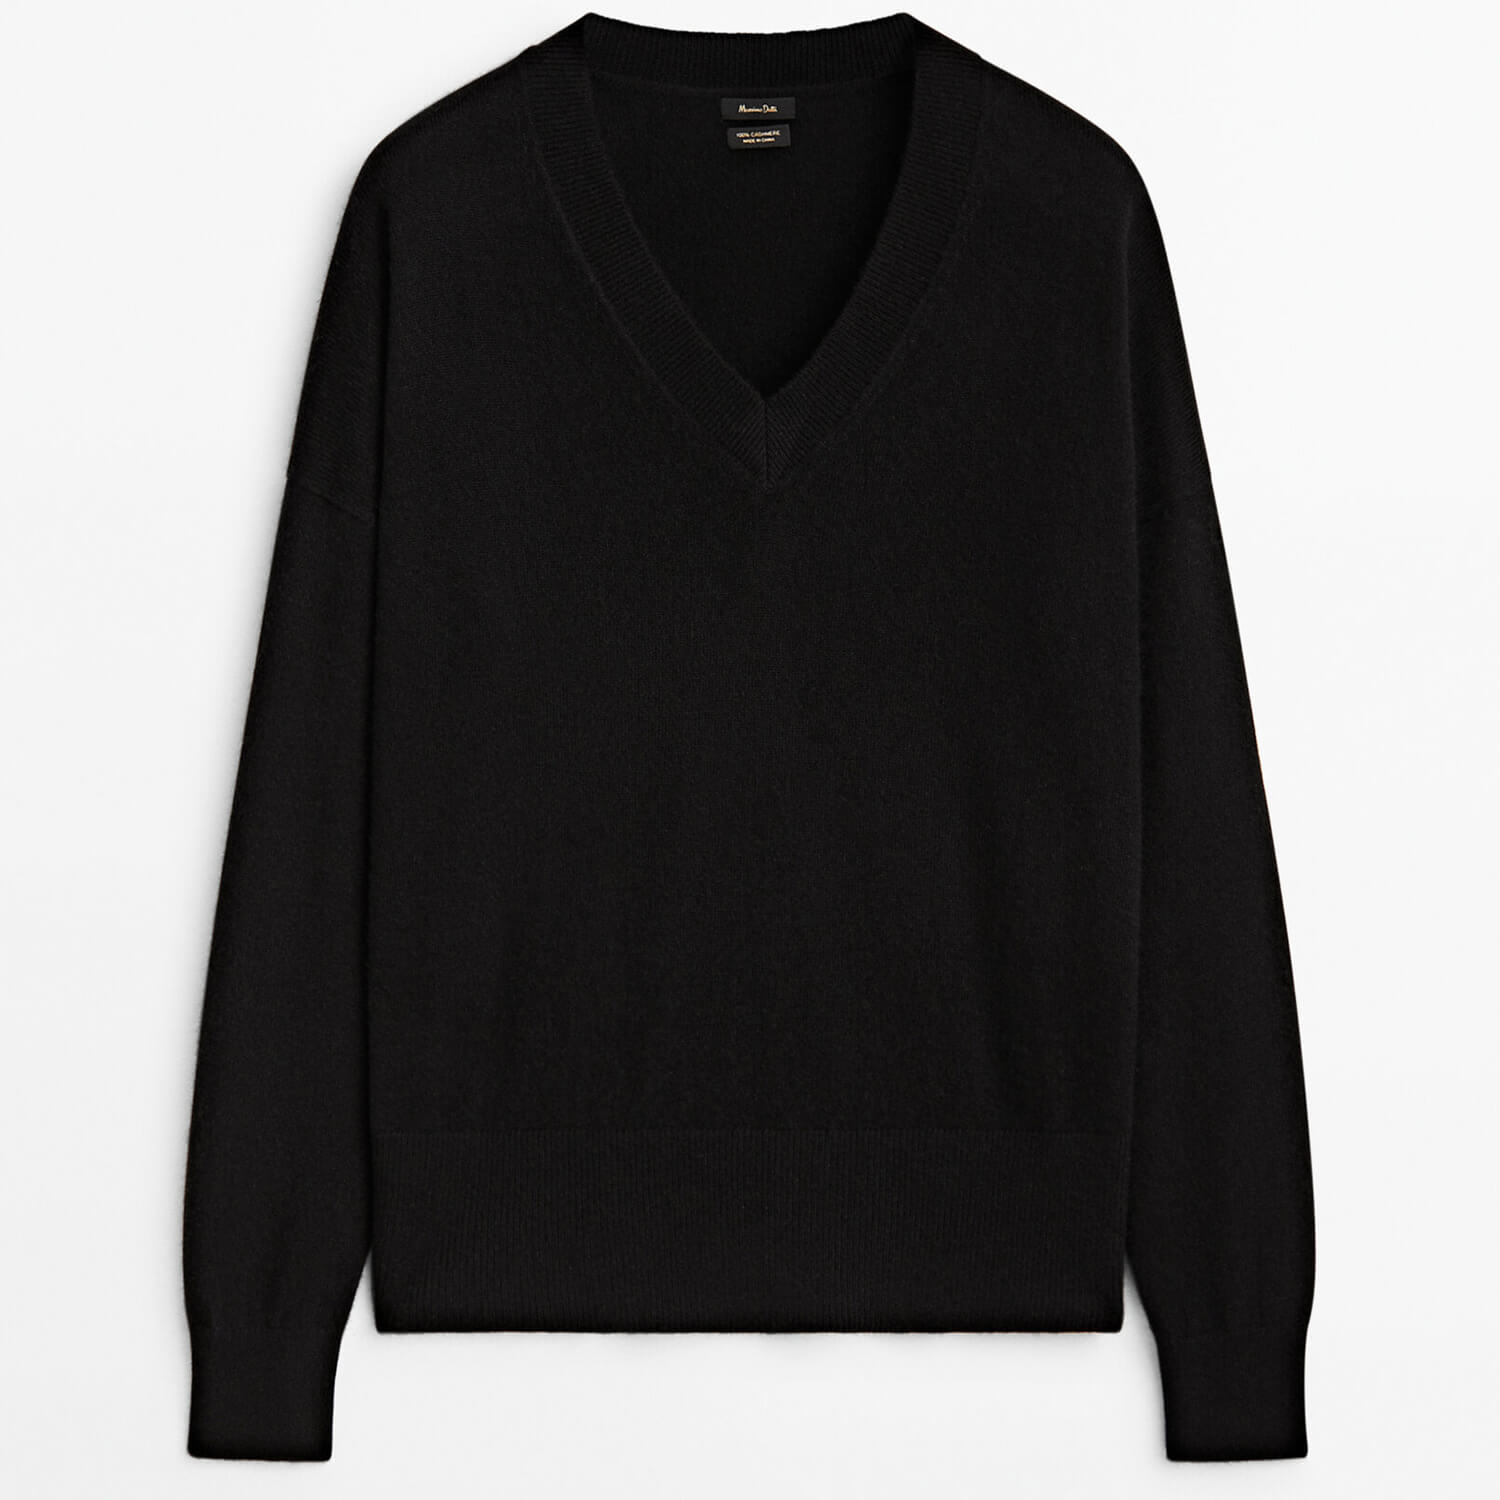 Свитер Massimo Dutti 100% Cashmere V-Neck, черный свитер massimo dutti 100% cashmere crew neck коричневый